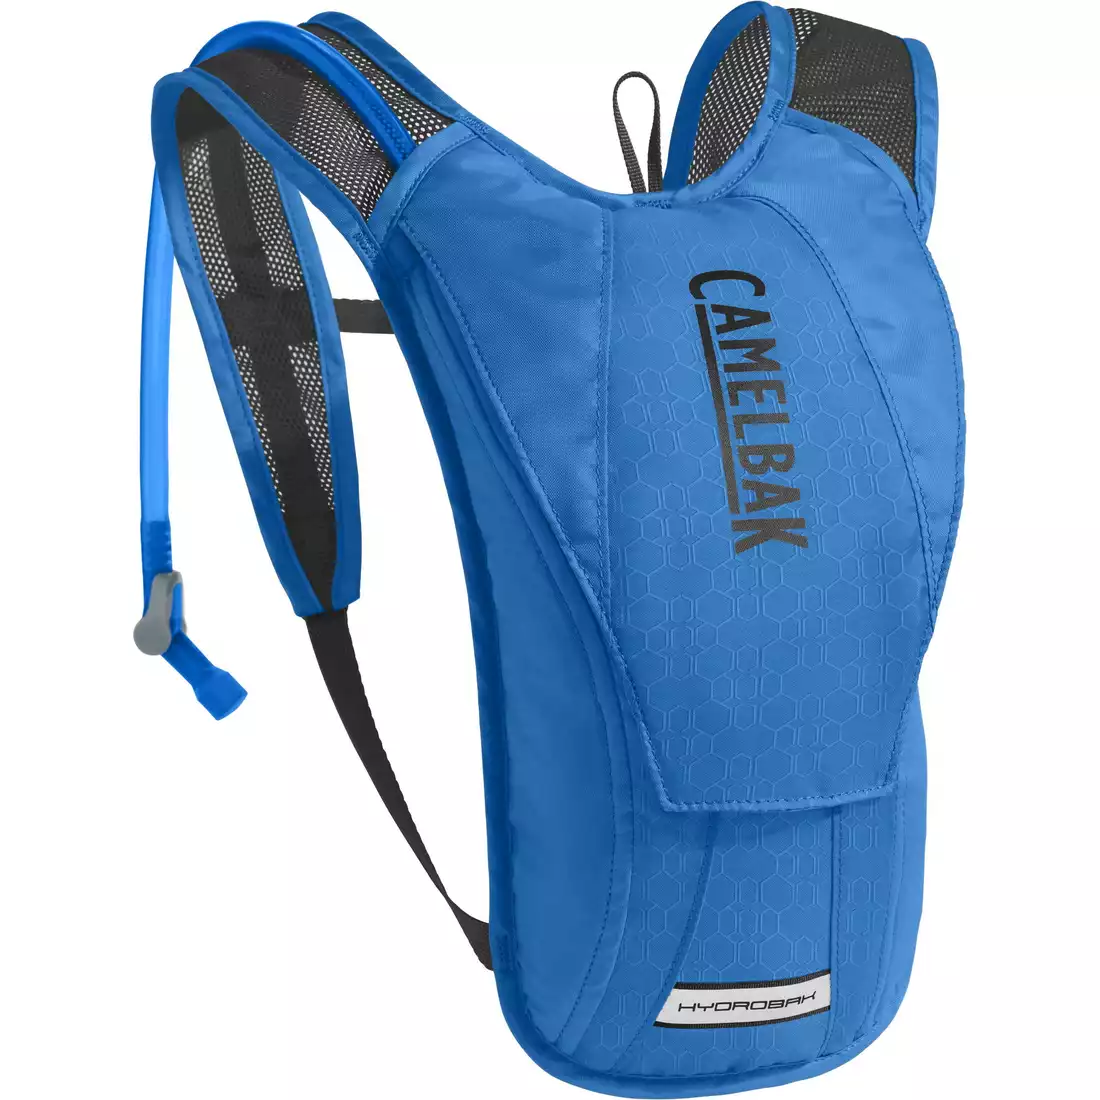 Camelbak SS18 plecak z bukłakiem HydroBak 50oz /1,5L Carve Blue/Black 1122403900